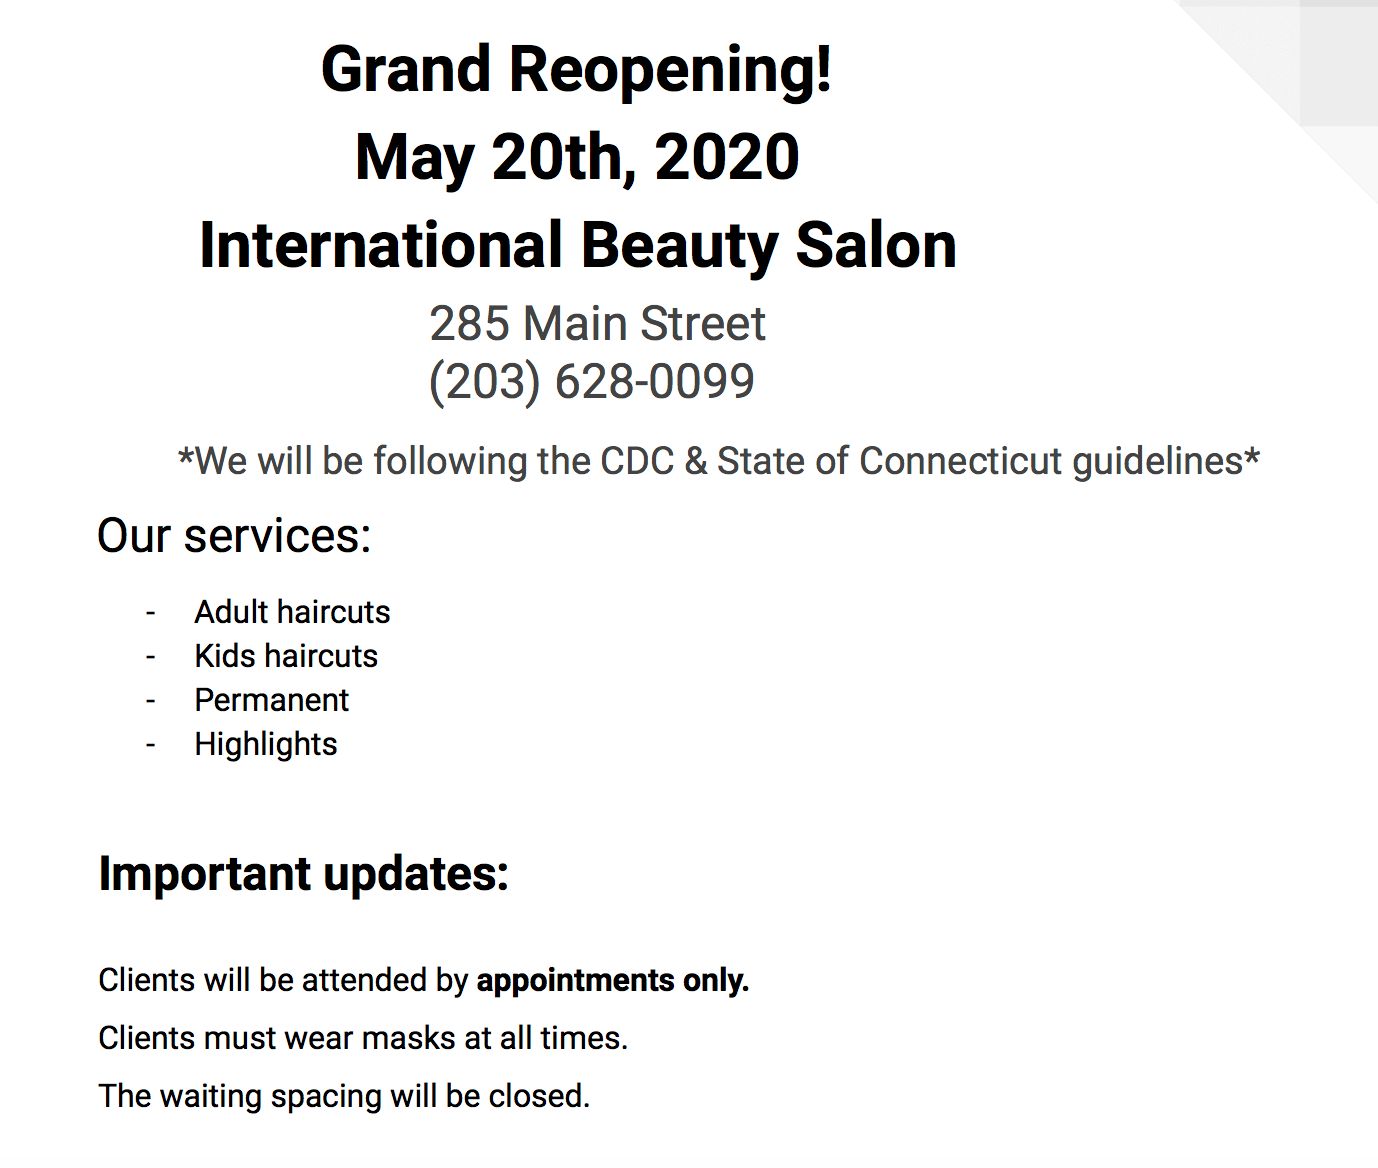 International Beauty Salon